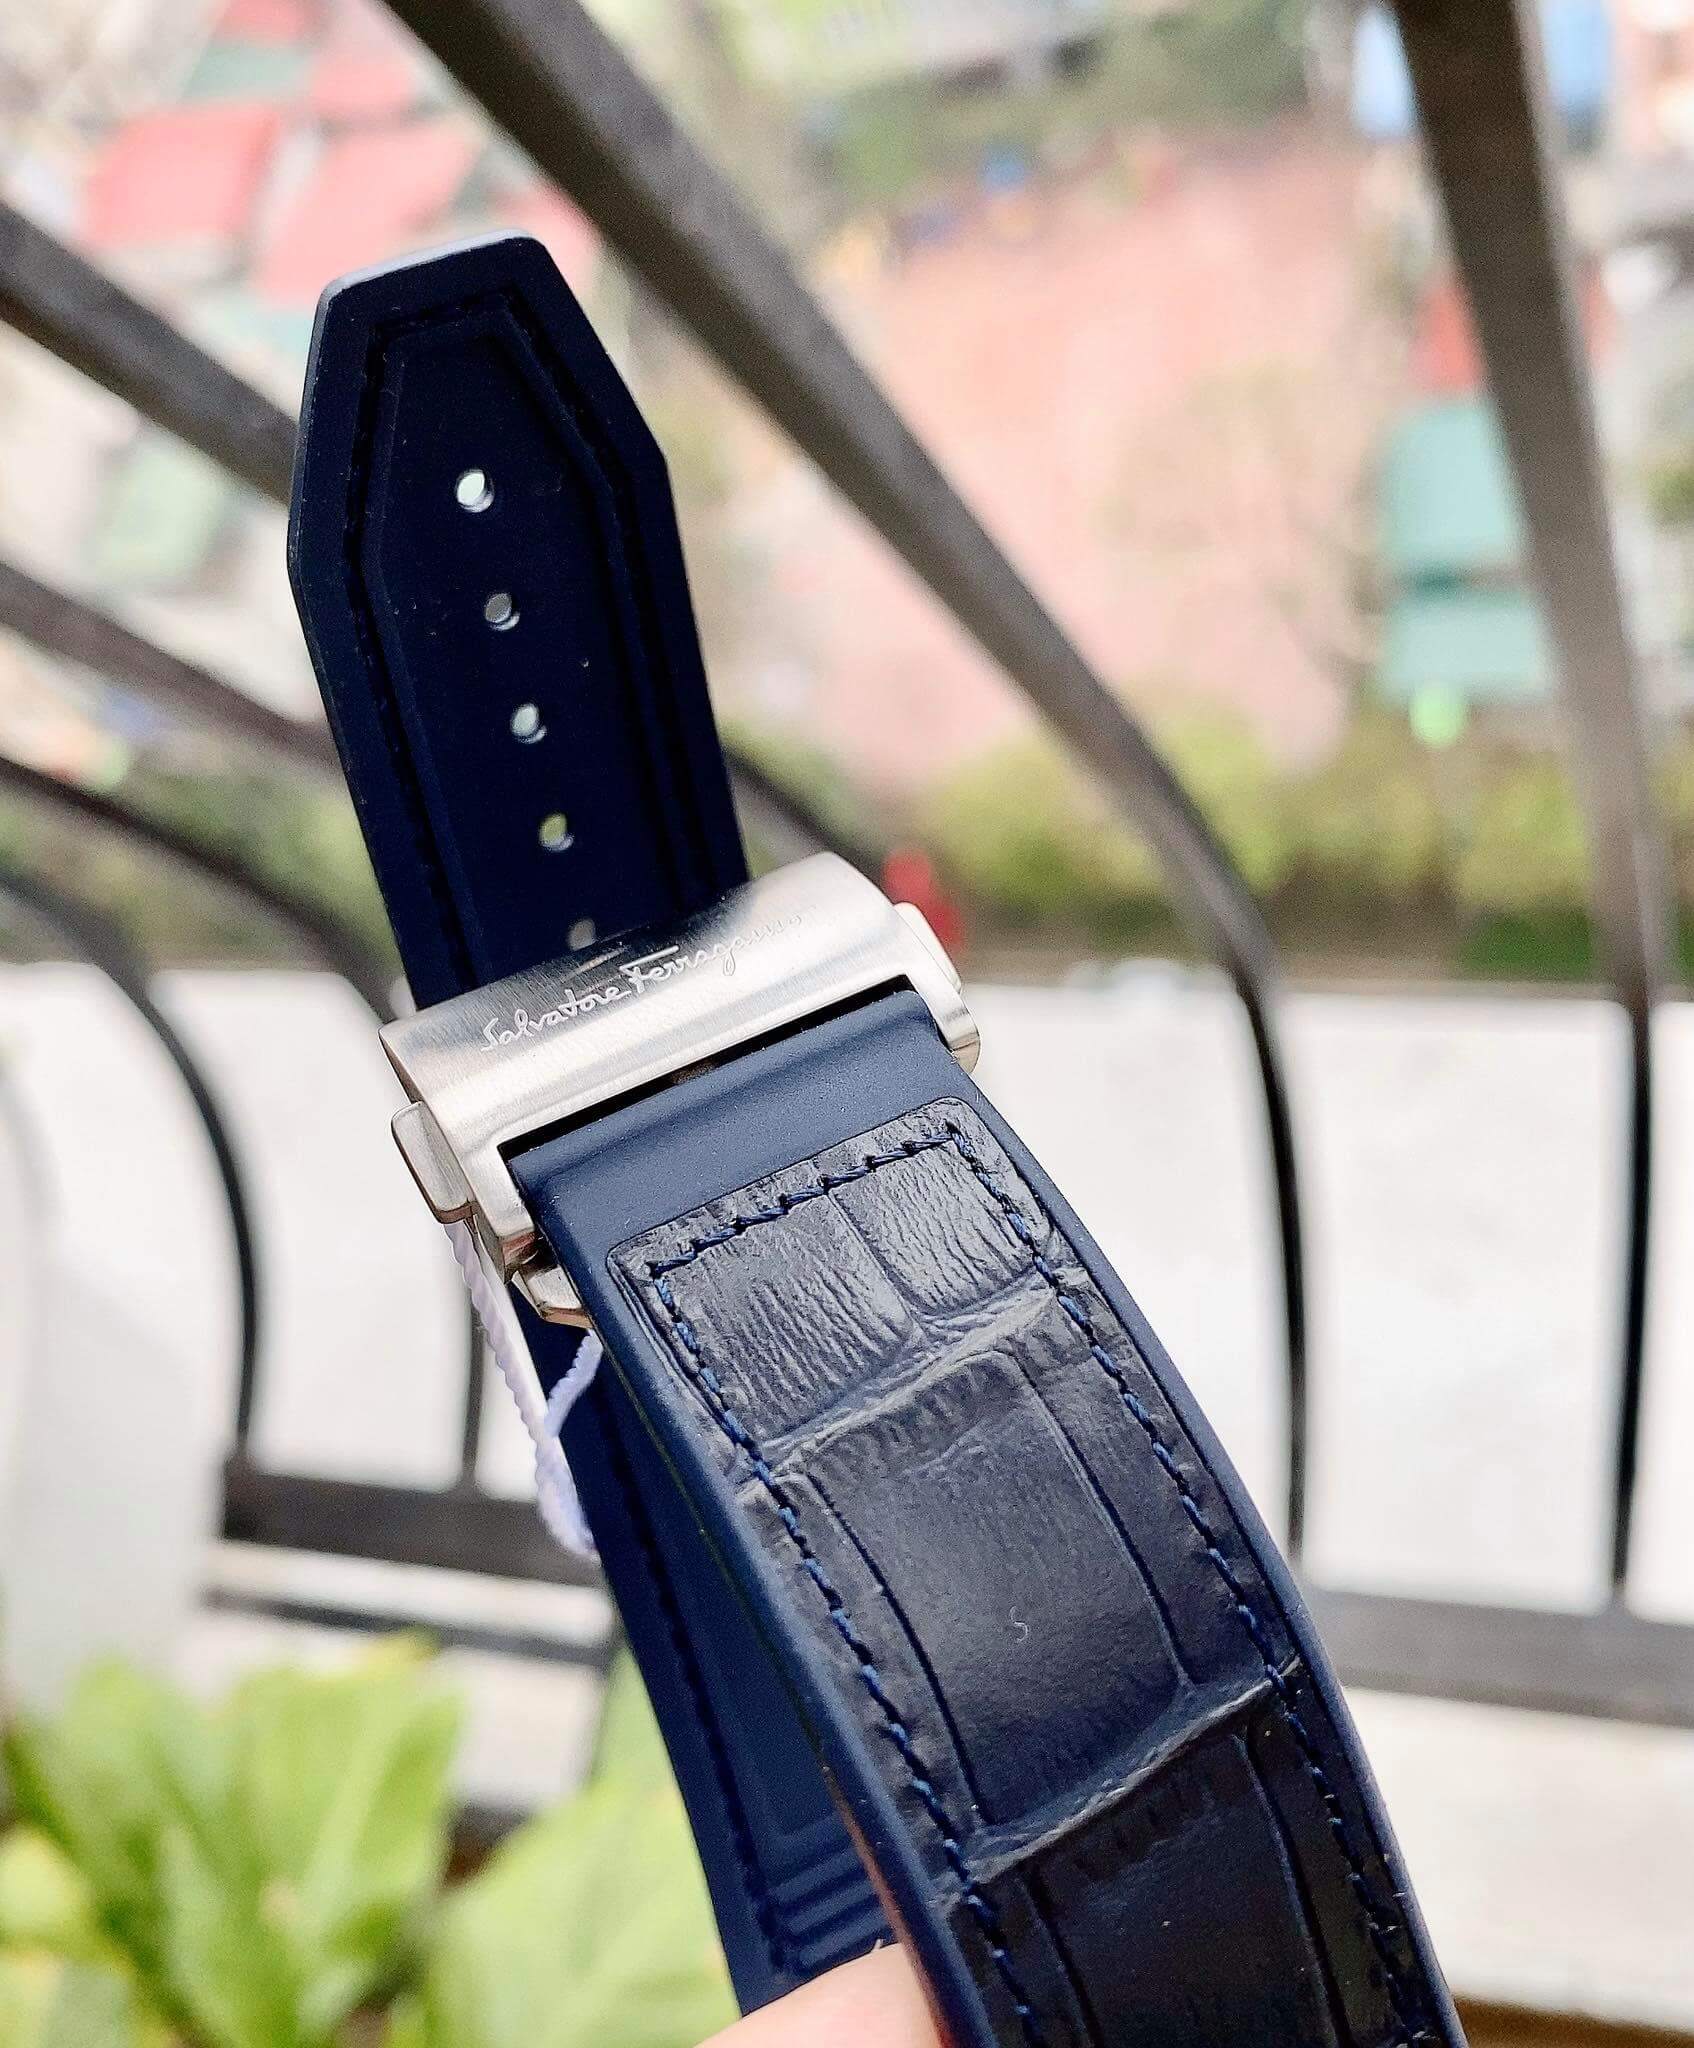 Salvatore Ferragamo F-80 Classic Blue Dial Blue Leather Strap Watch for Men - SFDT00319